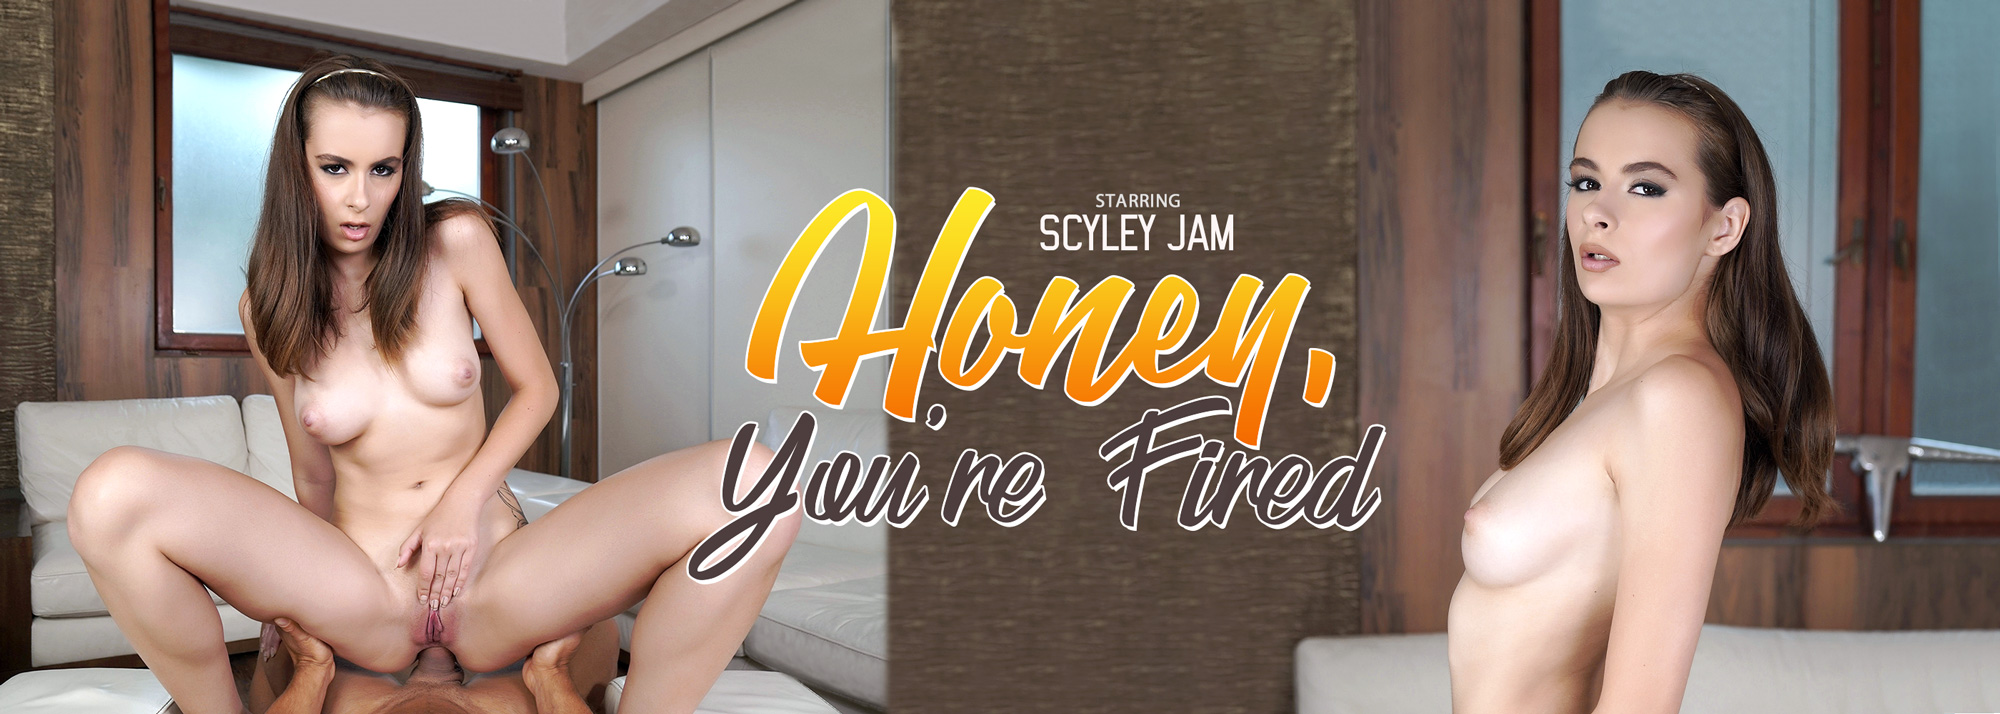 Honey, You're Fired with Scyley Jam  Slideshow